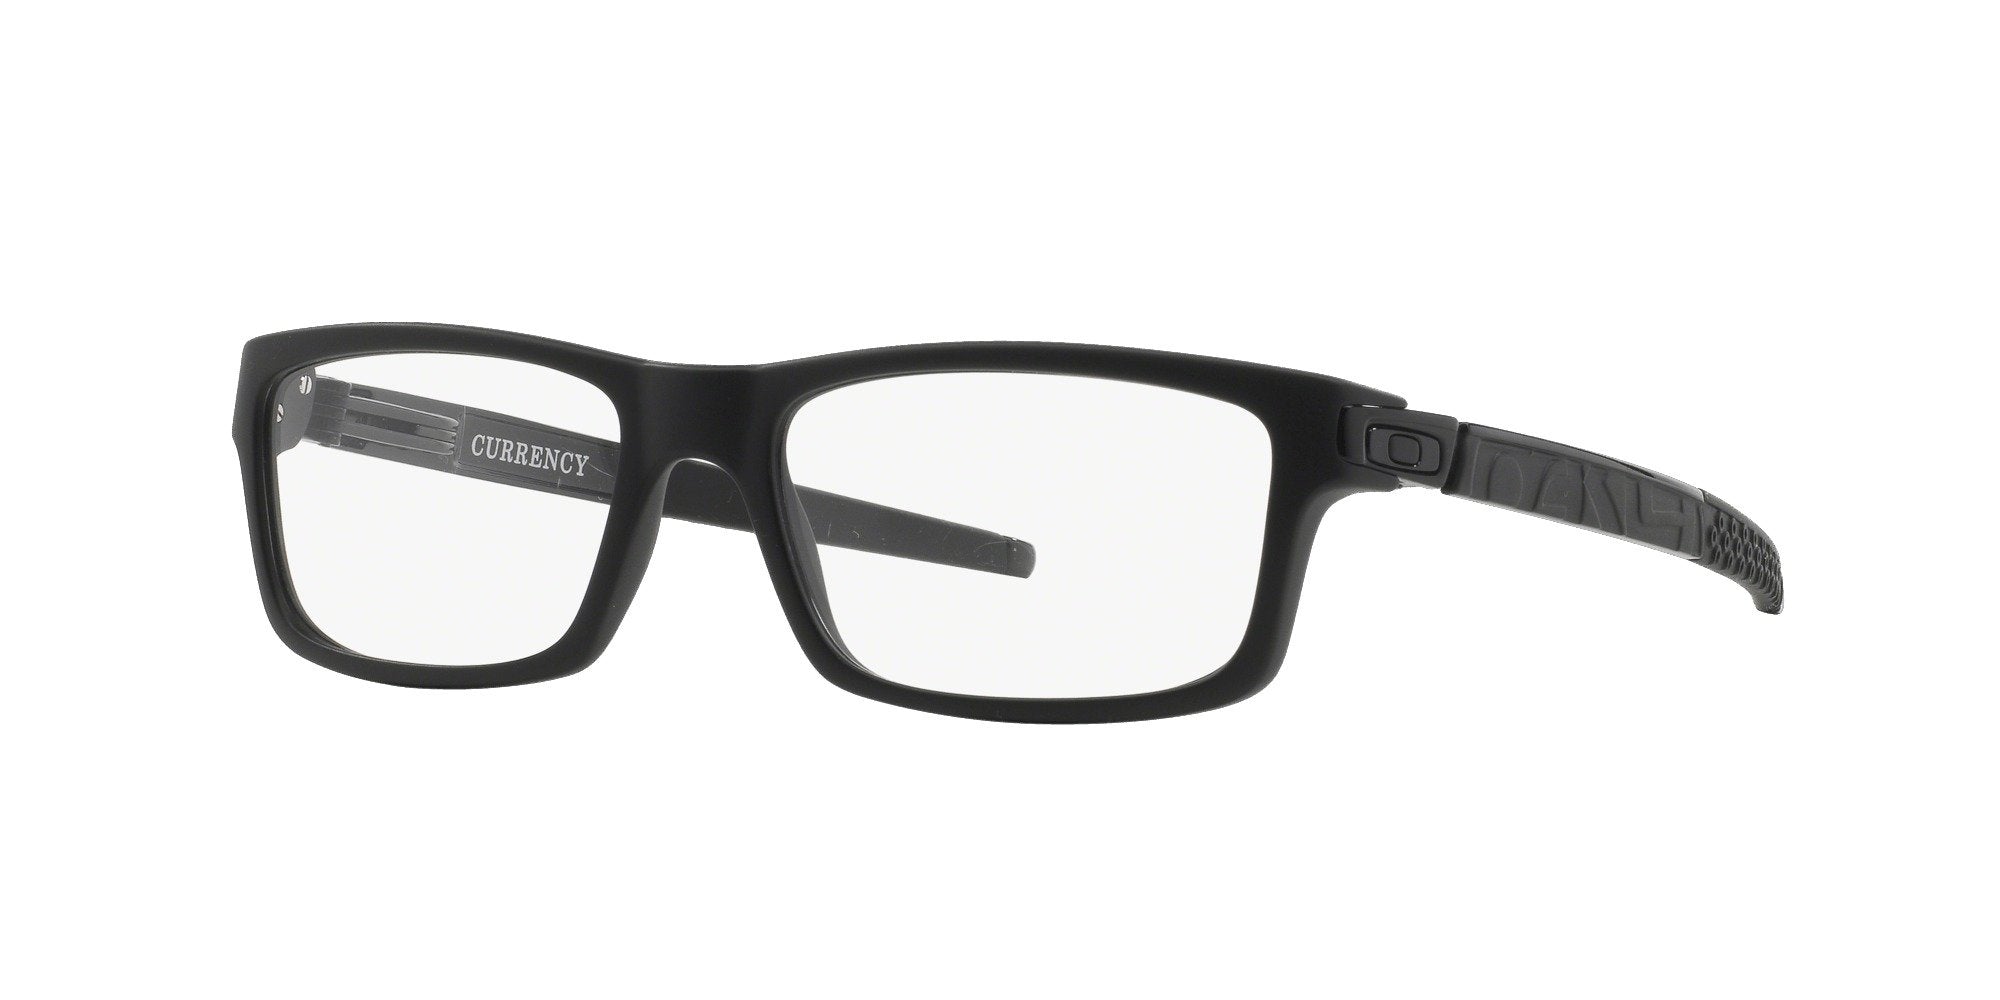 Oakley Currency OX8026 Square Glasses | Fashion Eyewear